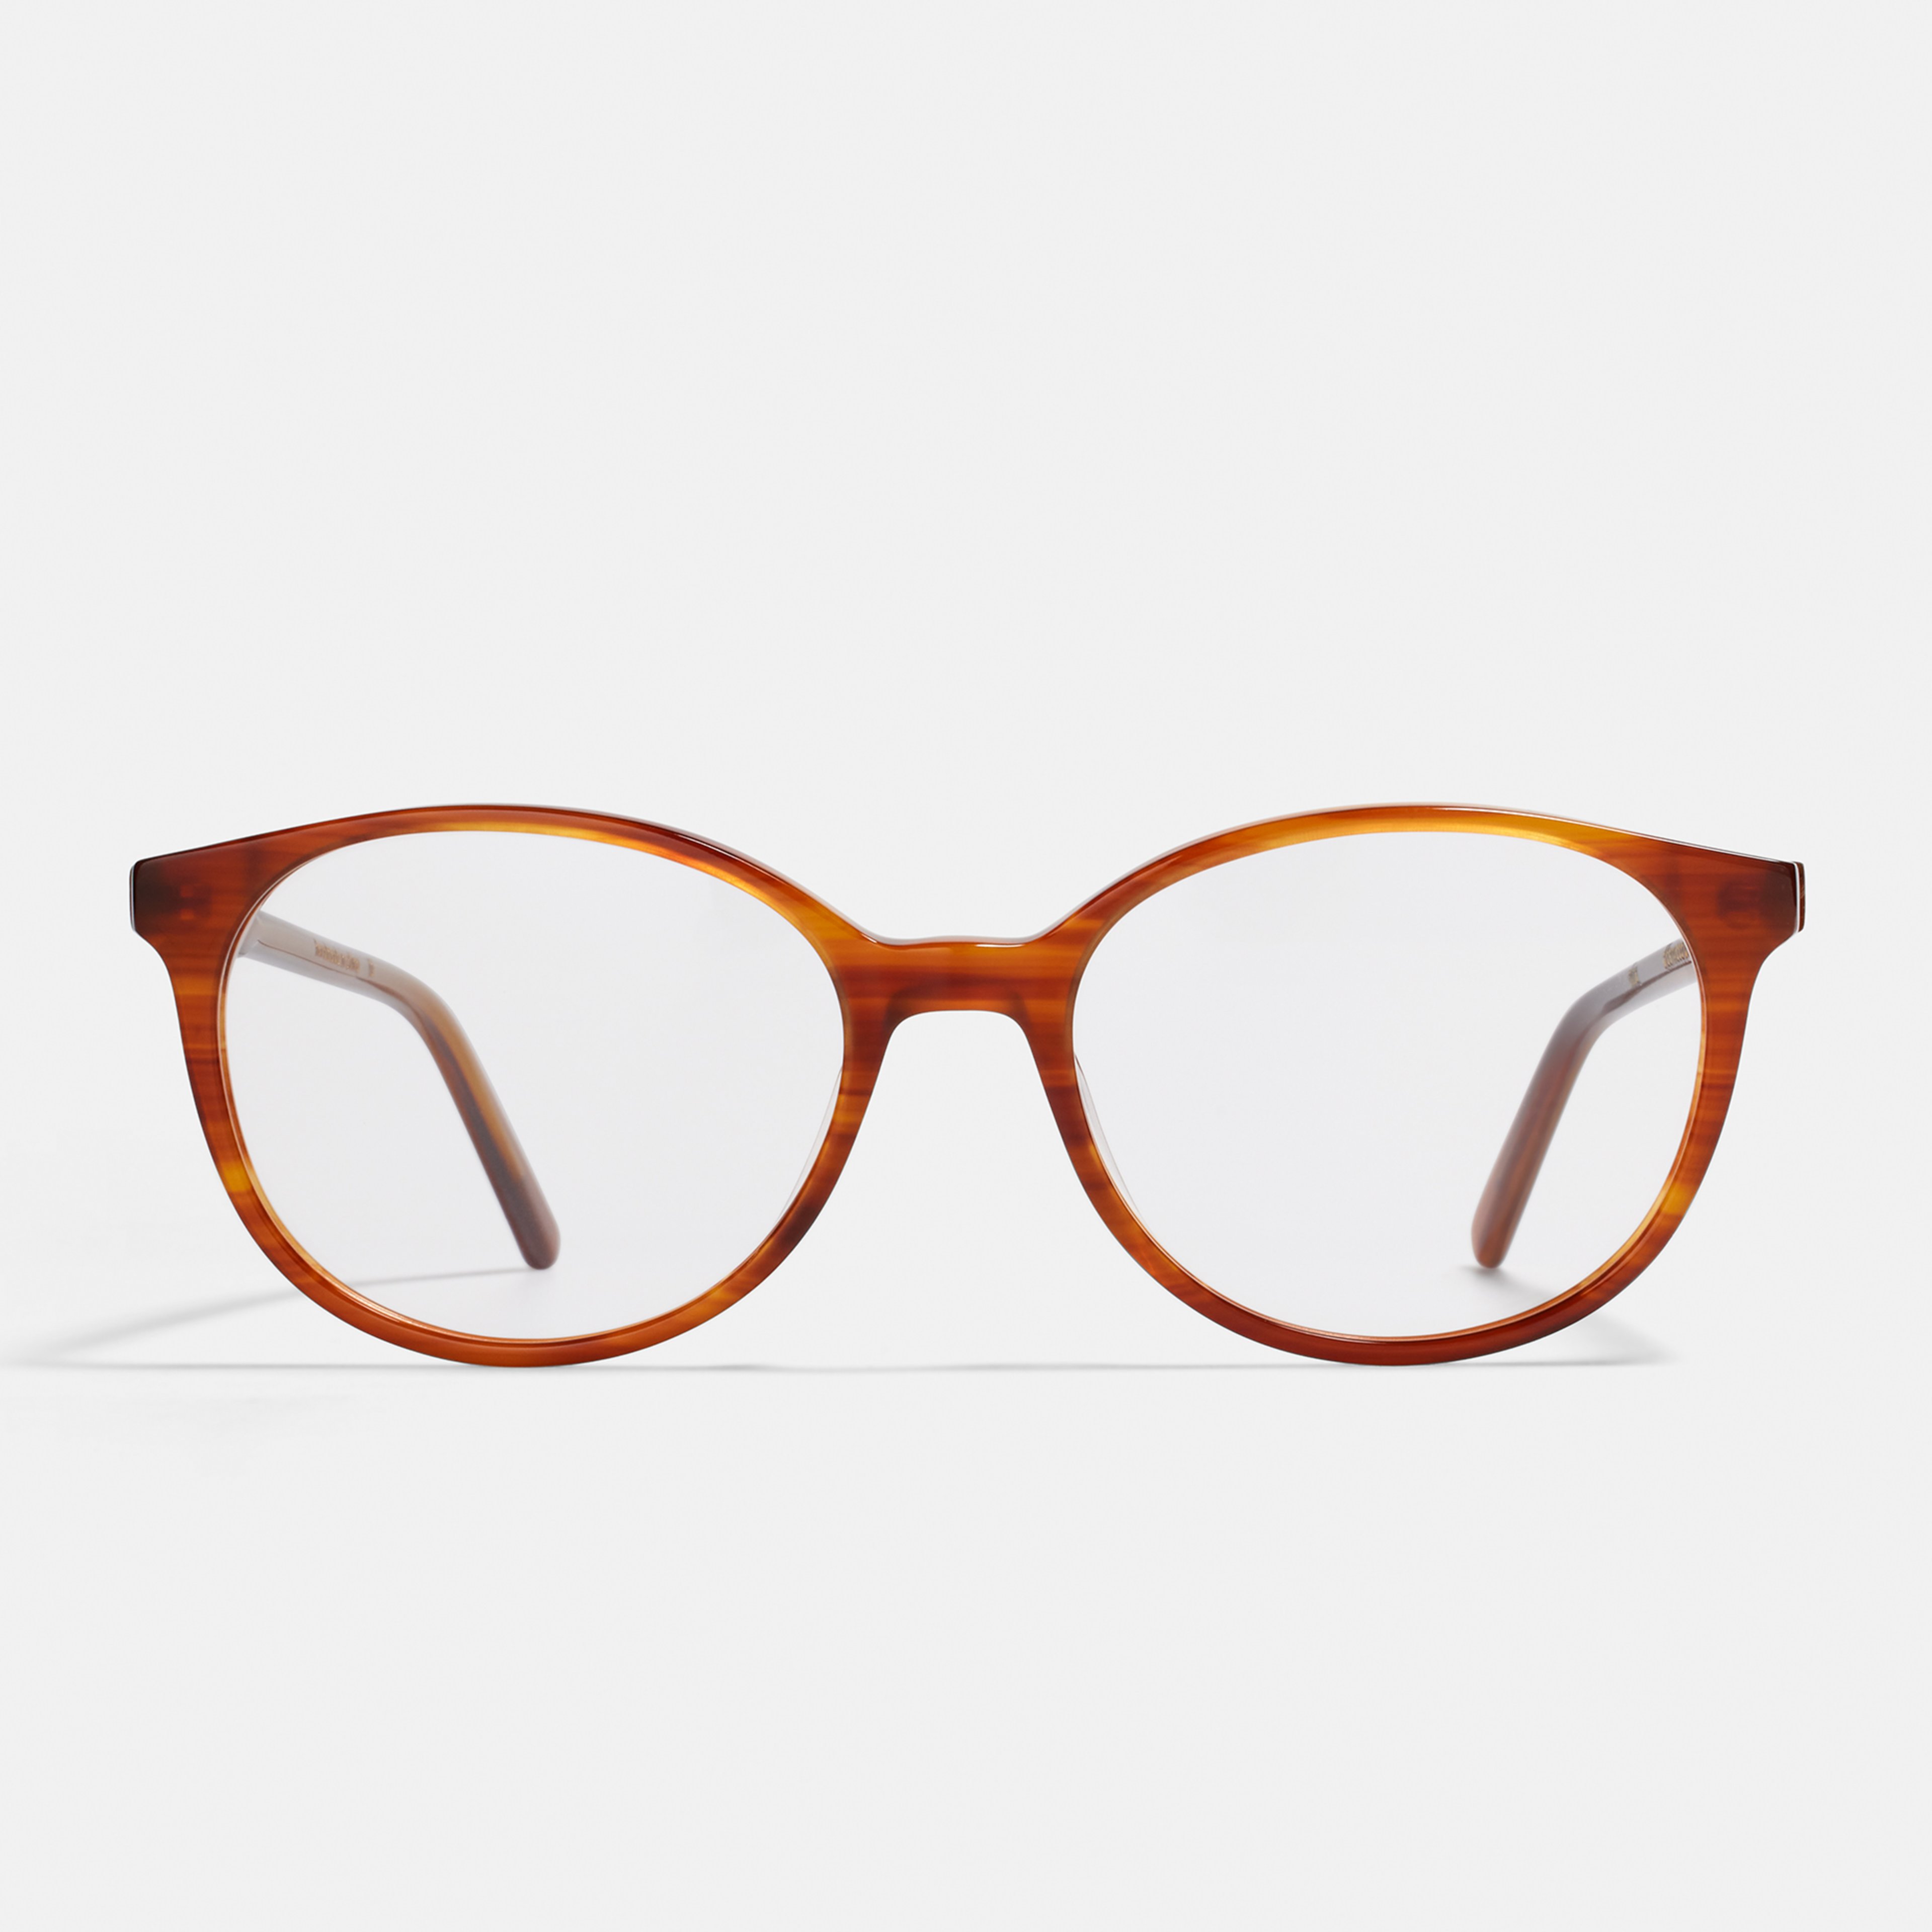 Ace & Tate Gafas | oval Acetato in Marrón, Naranja